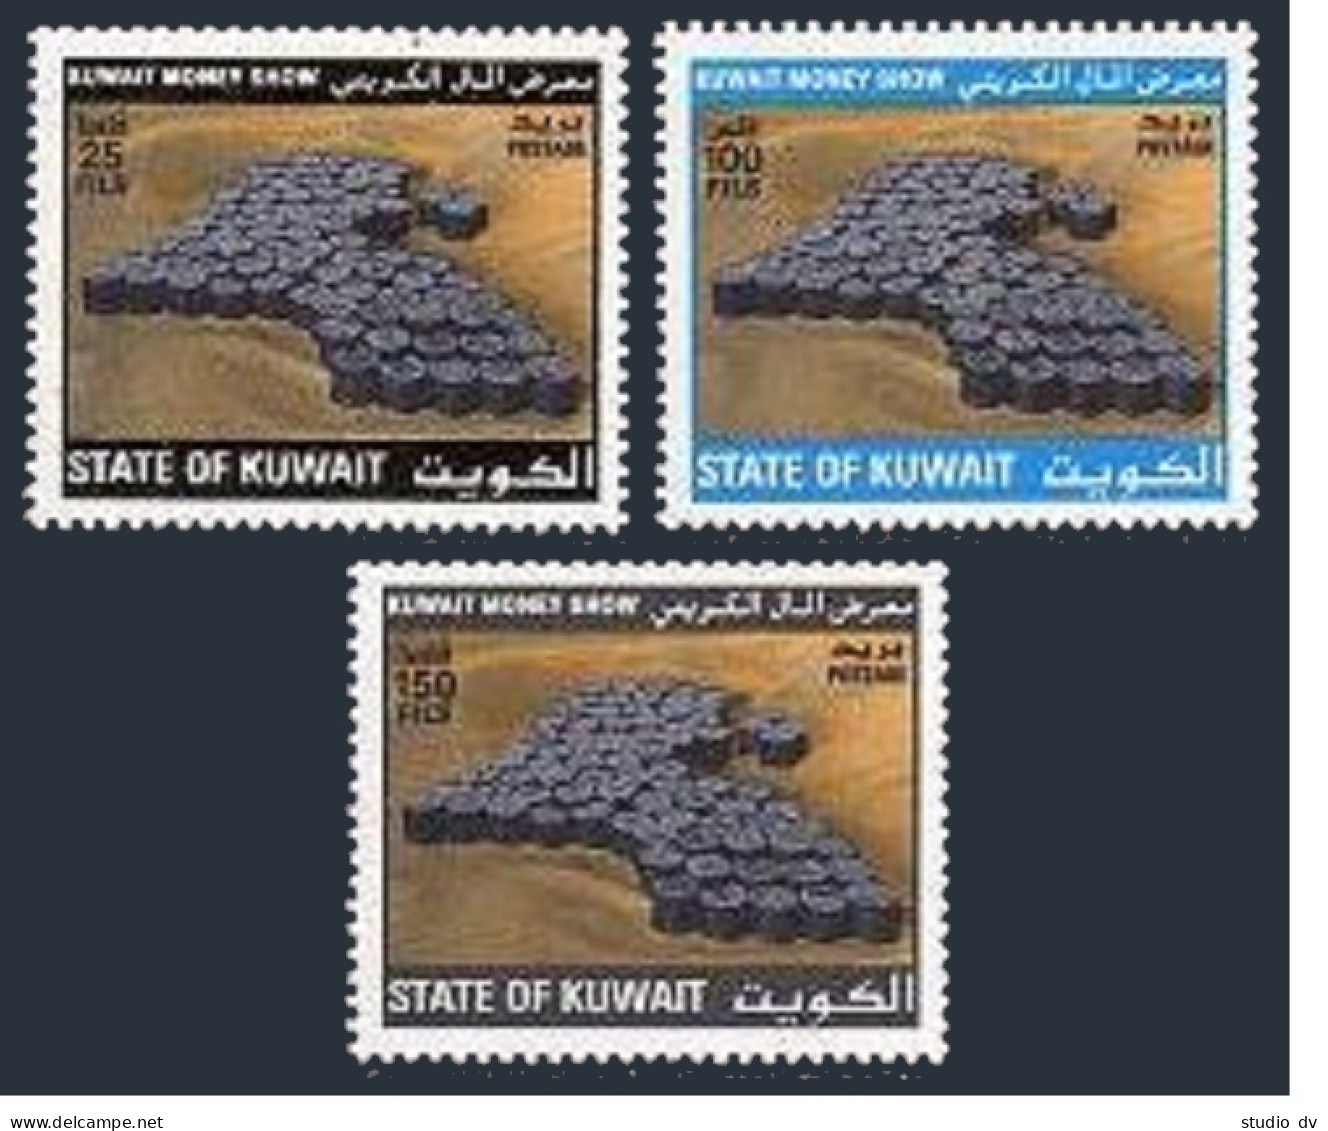 Kuwait 1318-1320, MNH. Michel 1435-1437. Kuwait Money Show, 1996. - Koweït